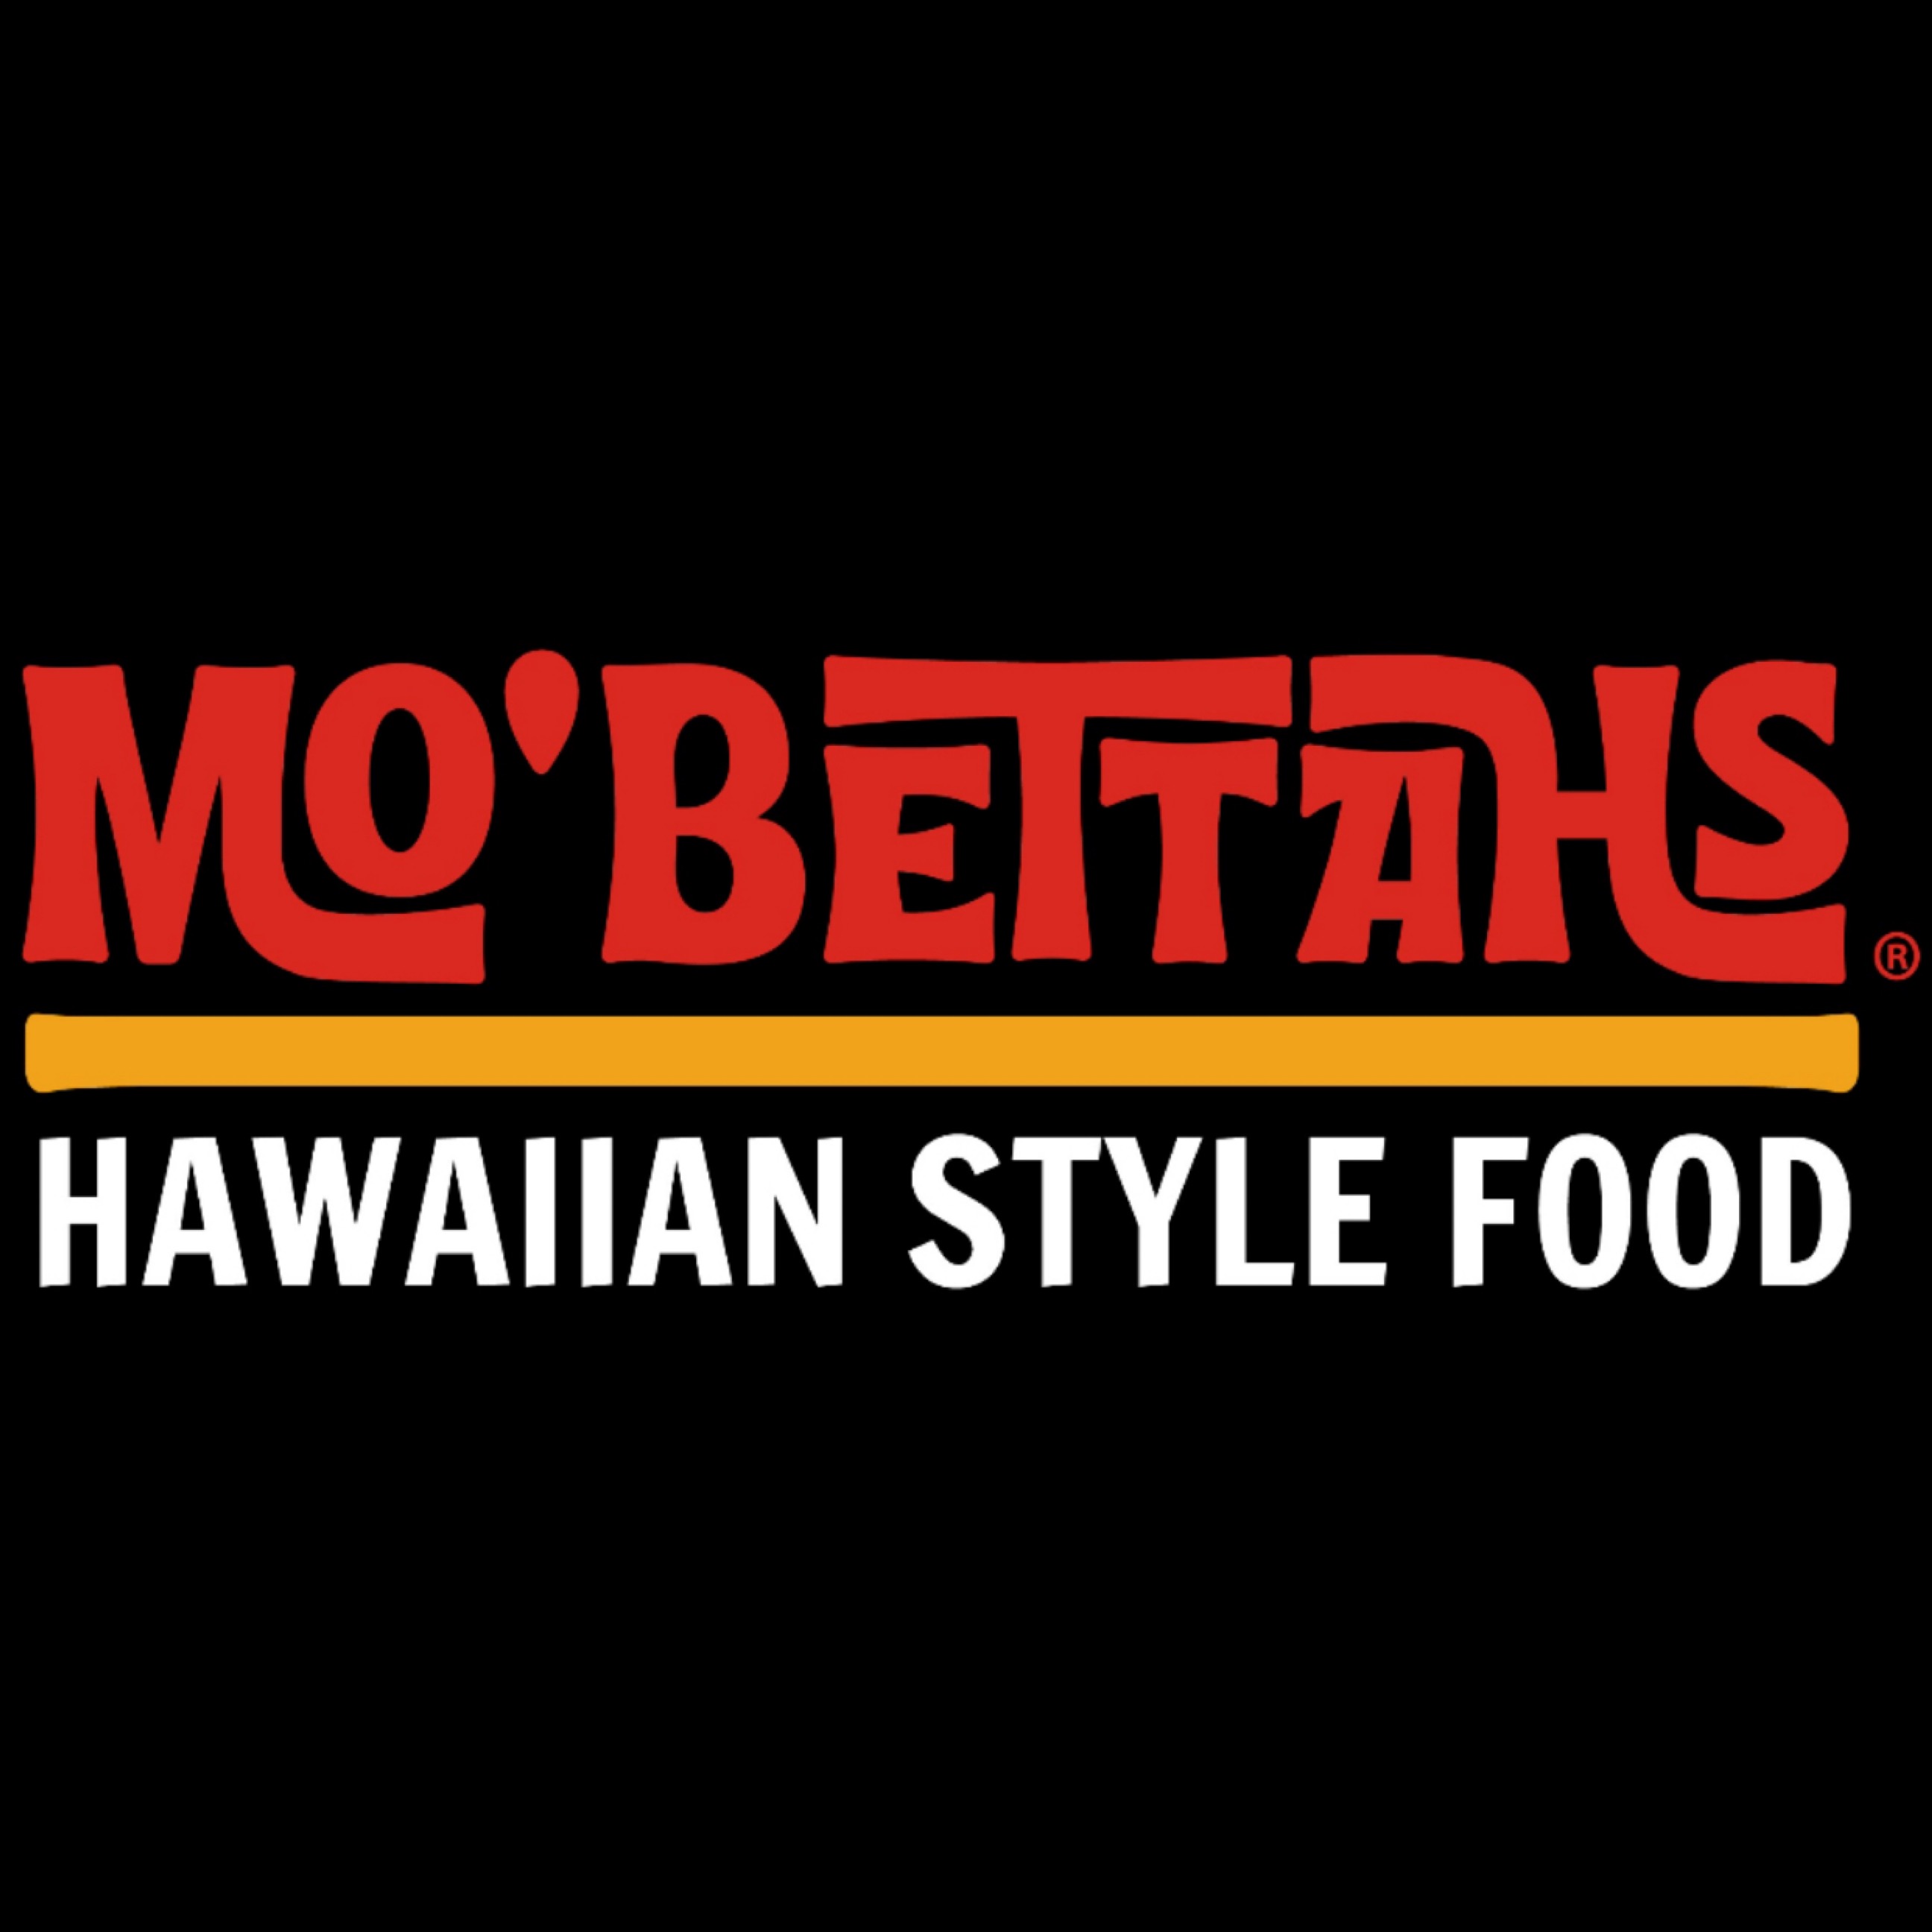 Art for Mo' Bettahs Hawaiian Style Food by Pipeline 2 Paradise Radio